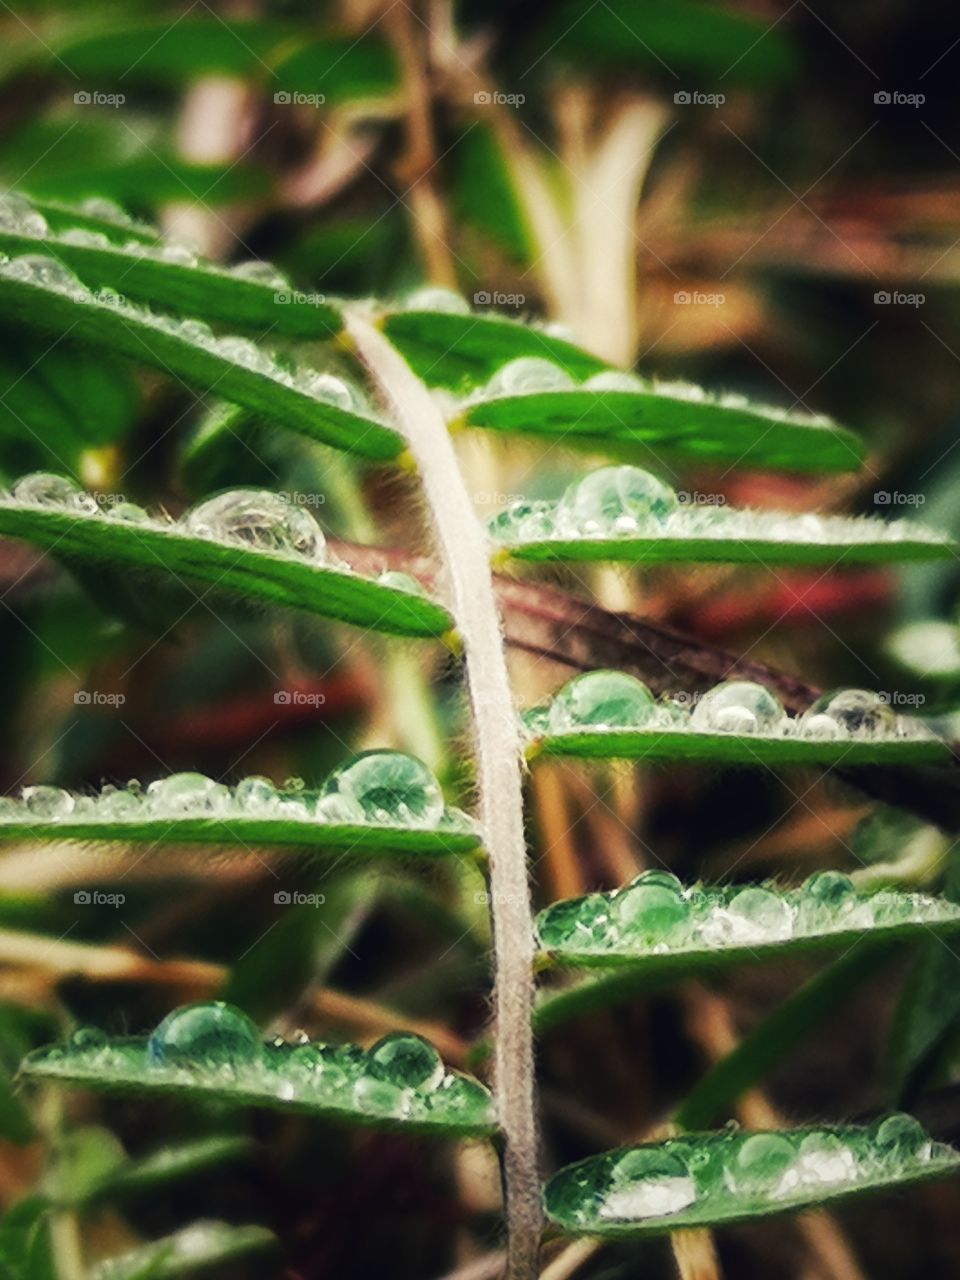 Rainy drops on the grass